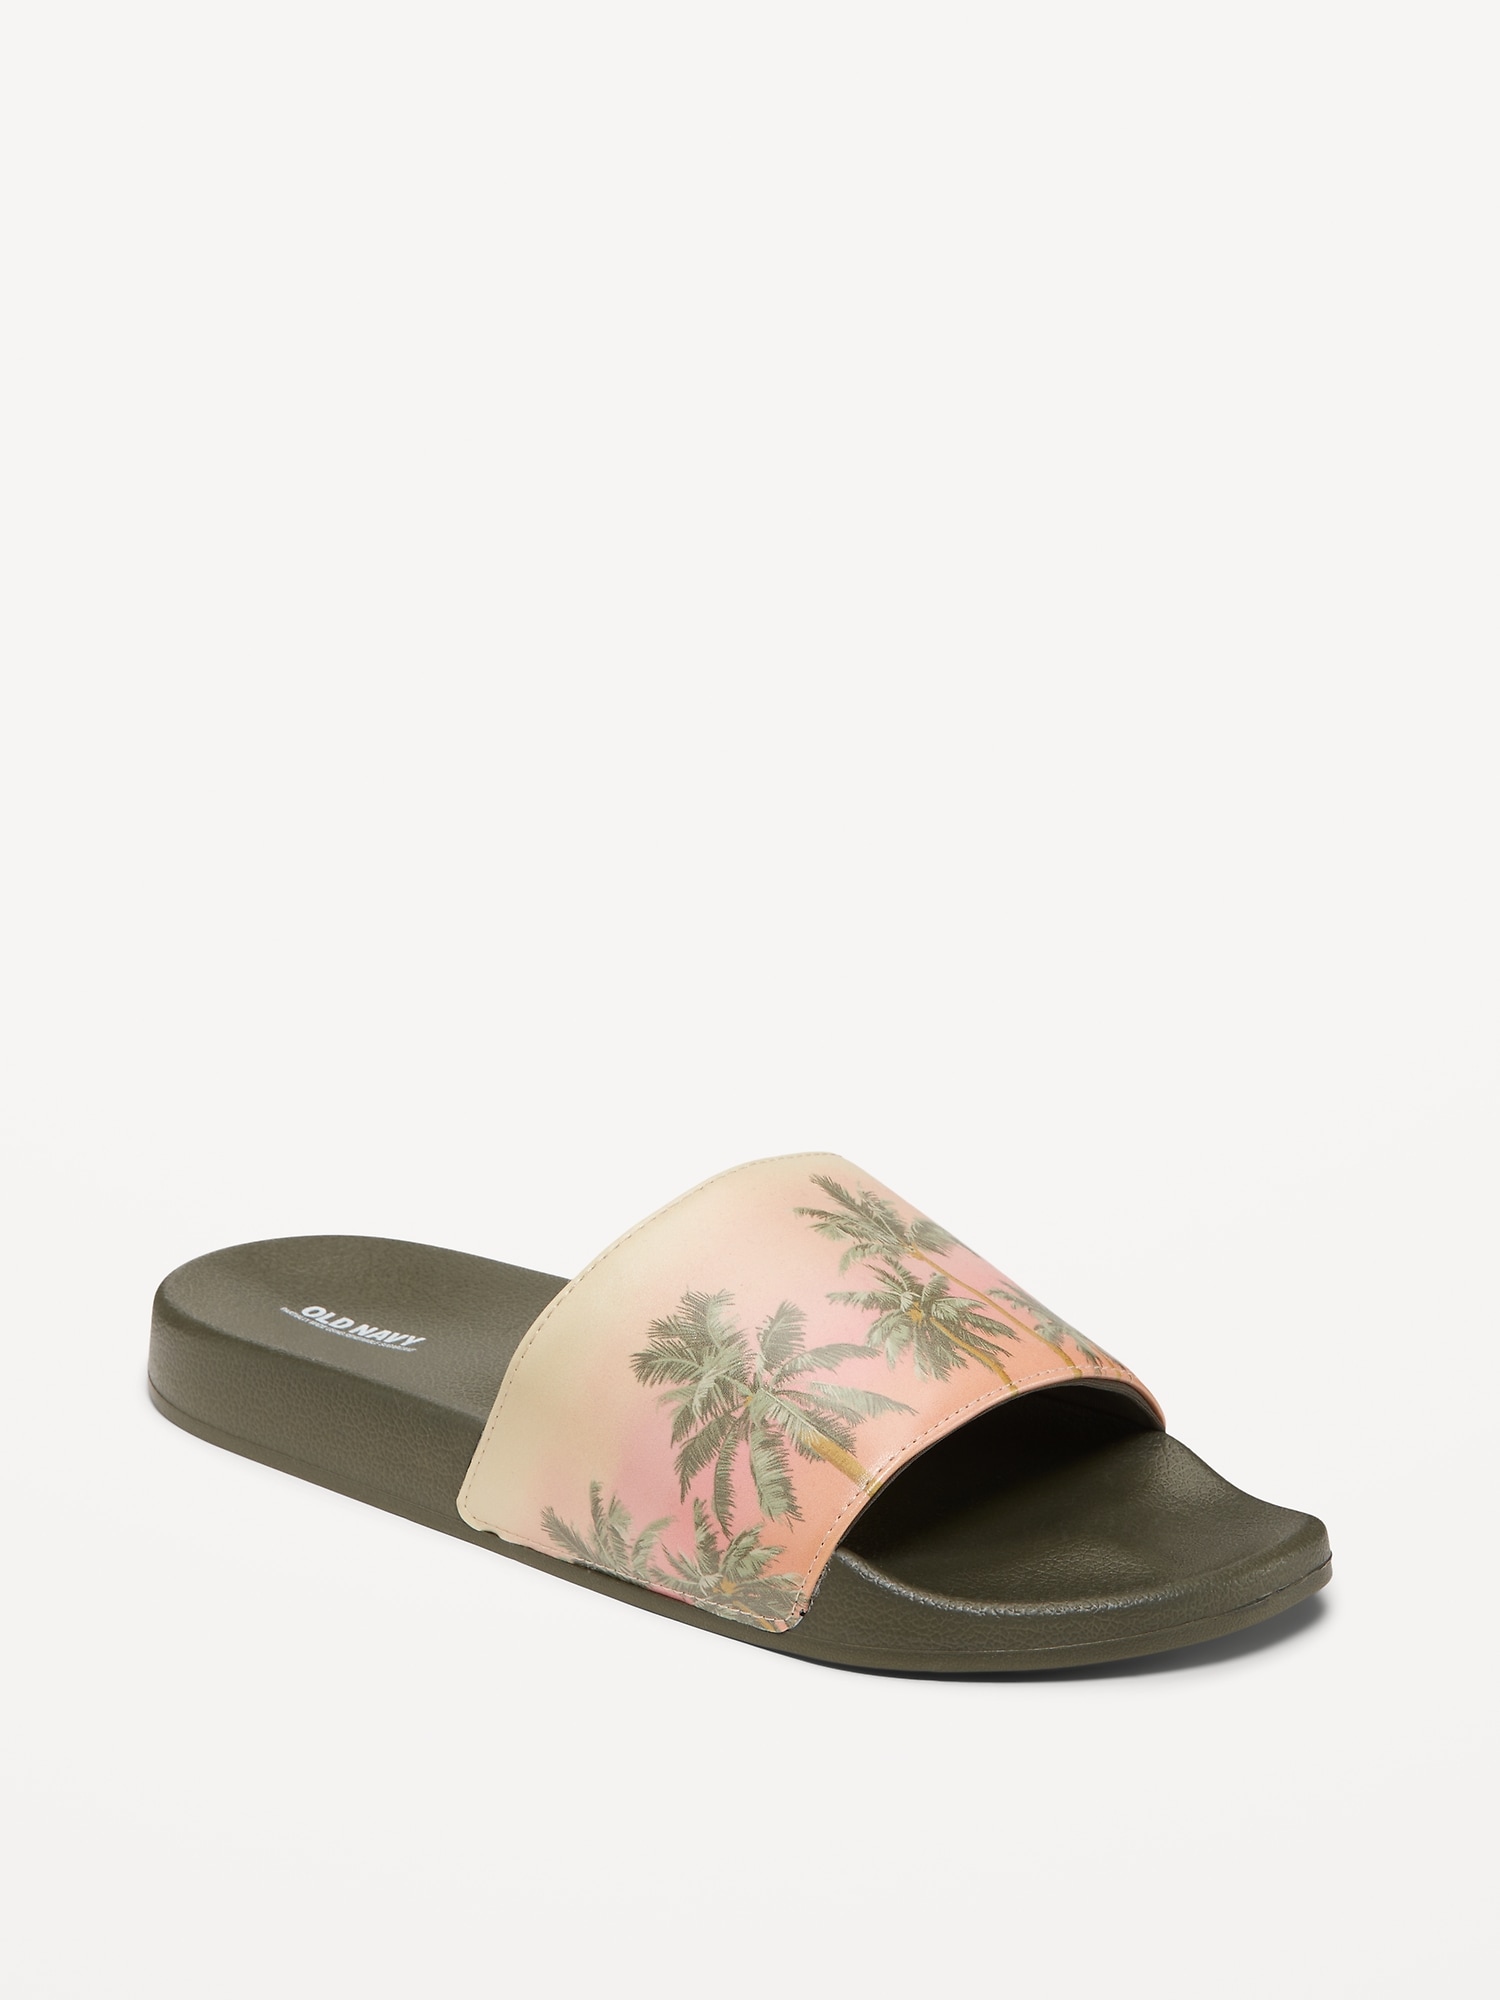 Slide Sandals (Partially Plant-Based)